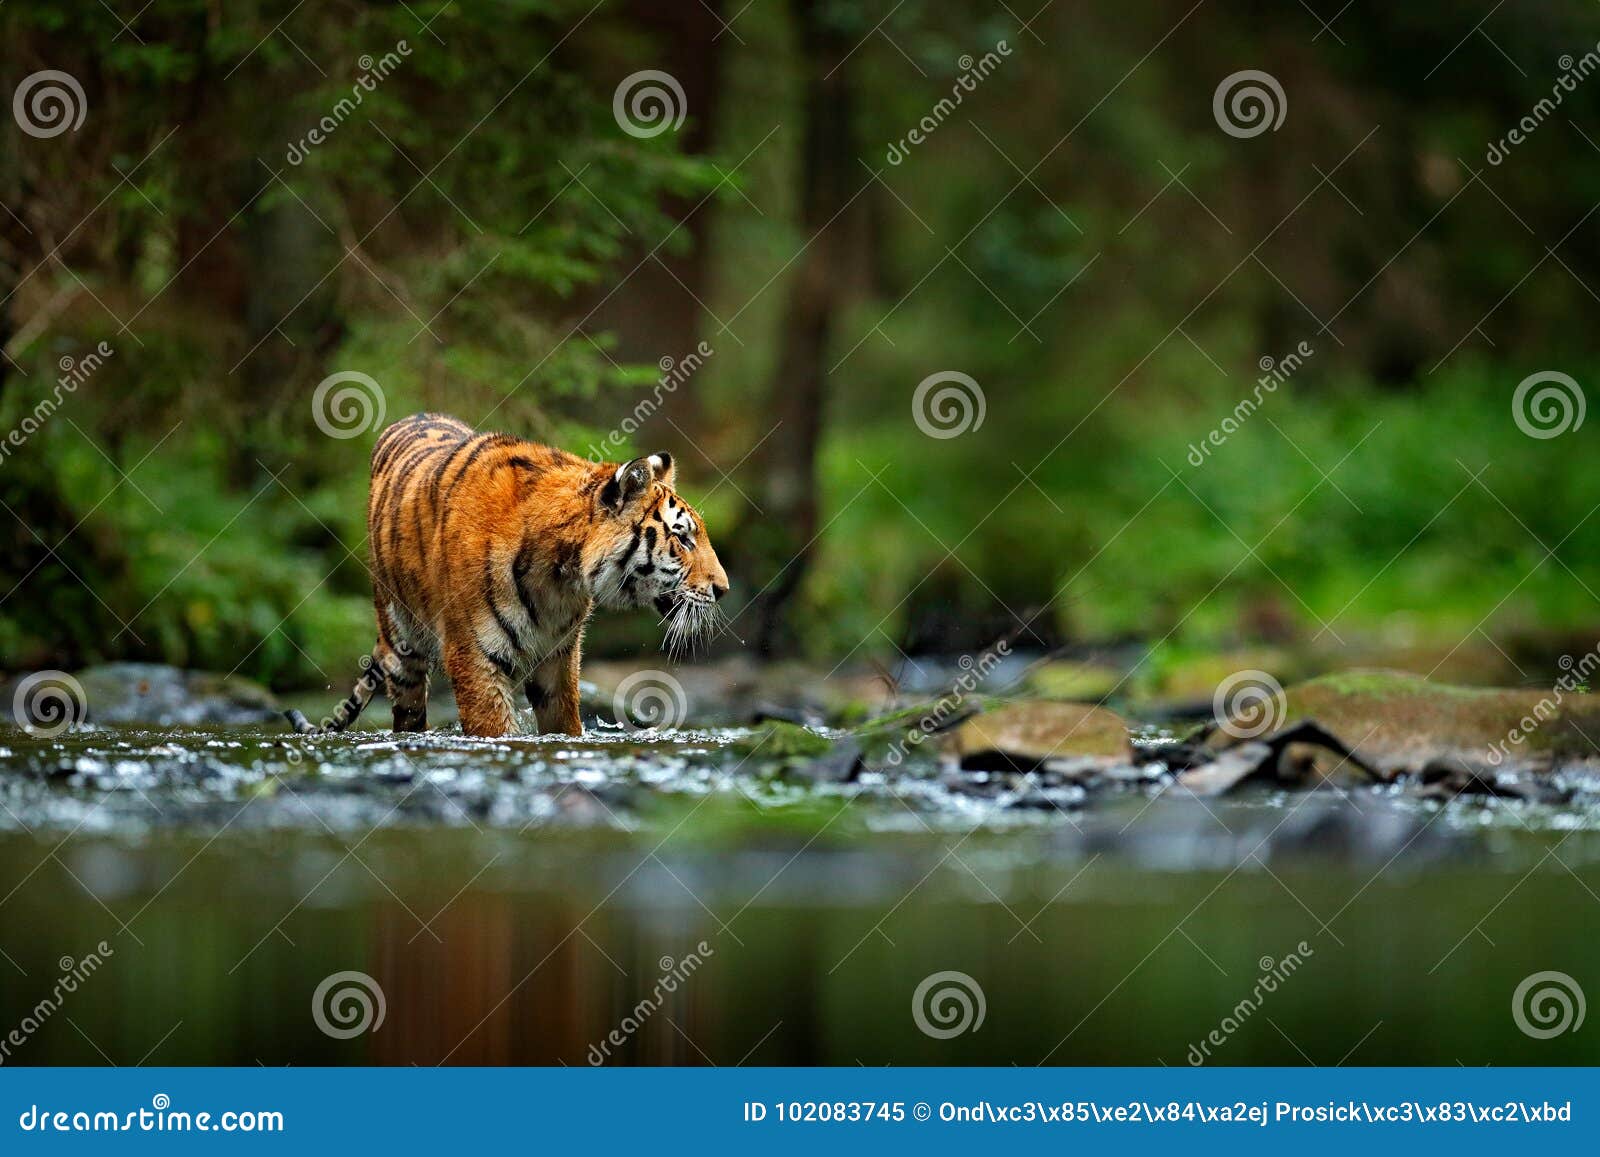 amur tiger walking in river water. danger animal, tajga, russia. animal in green forest stream. grey stone, river droplet. siberia